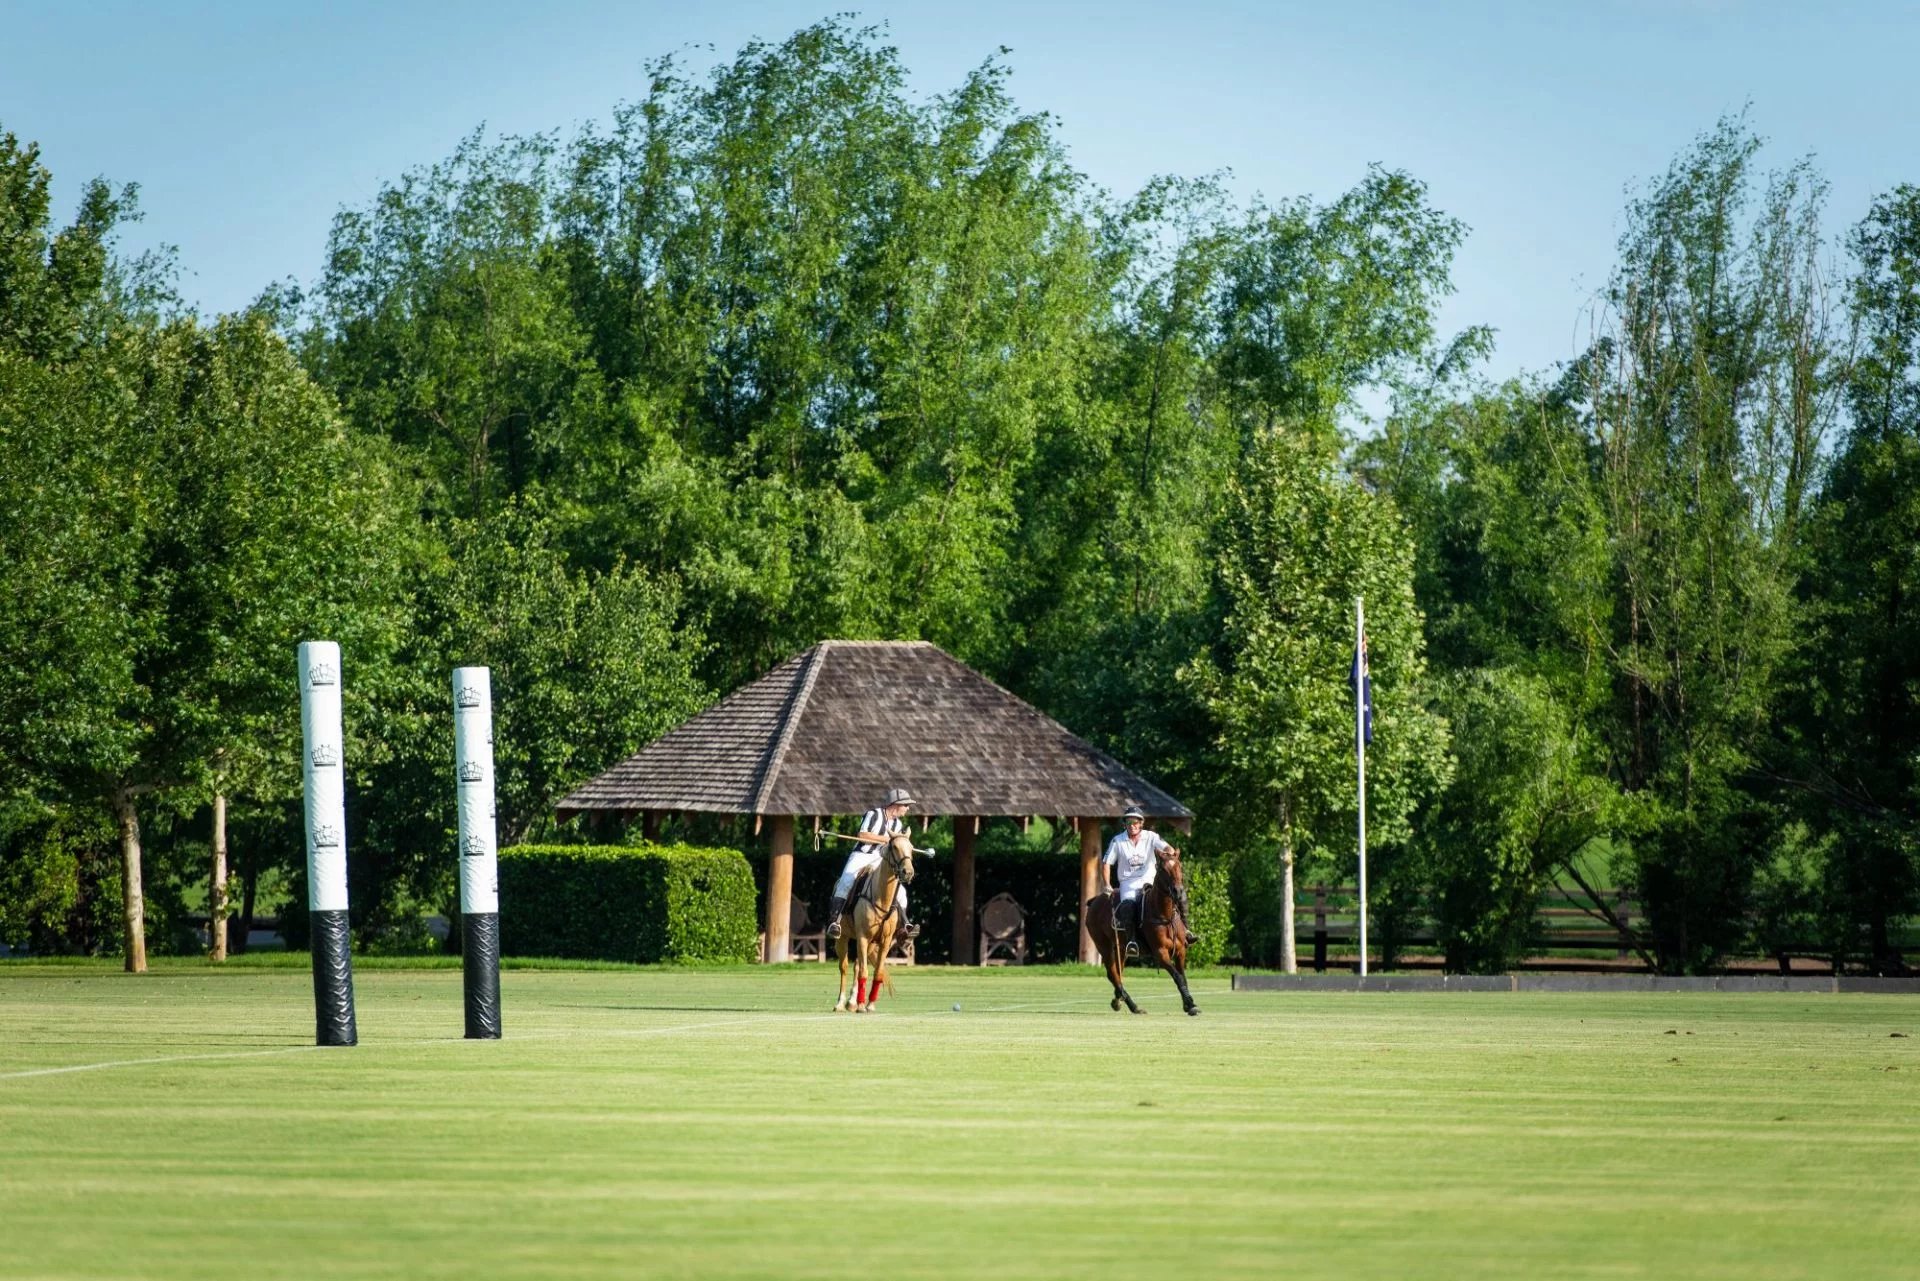 sydney-s premier polo club in an idyllic setting by the hawkesbury river image33